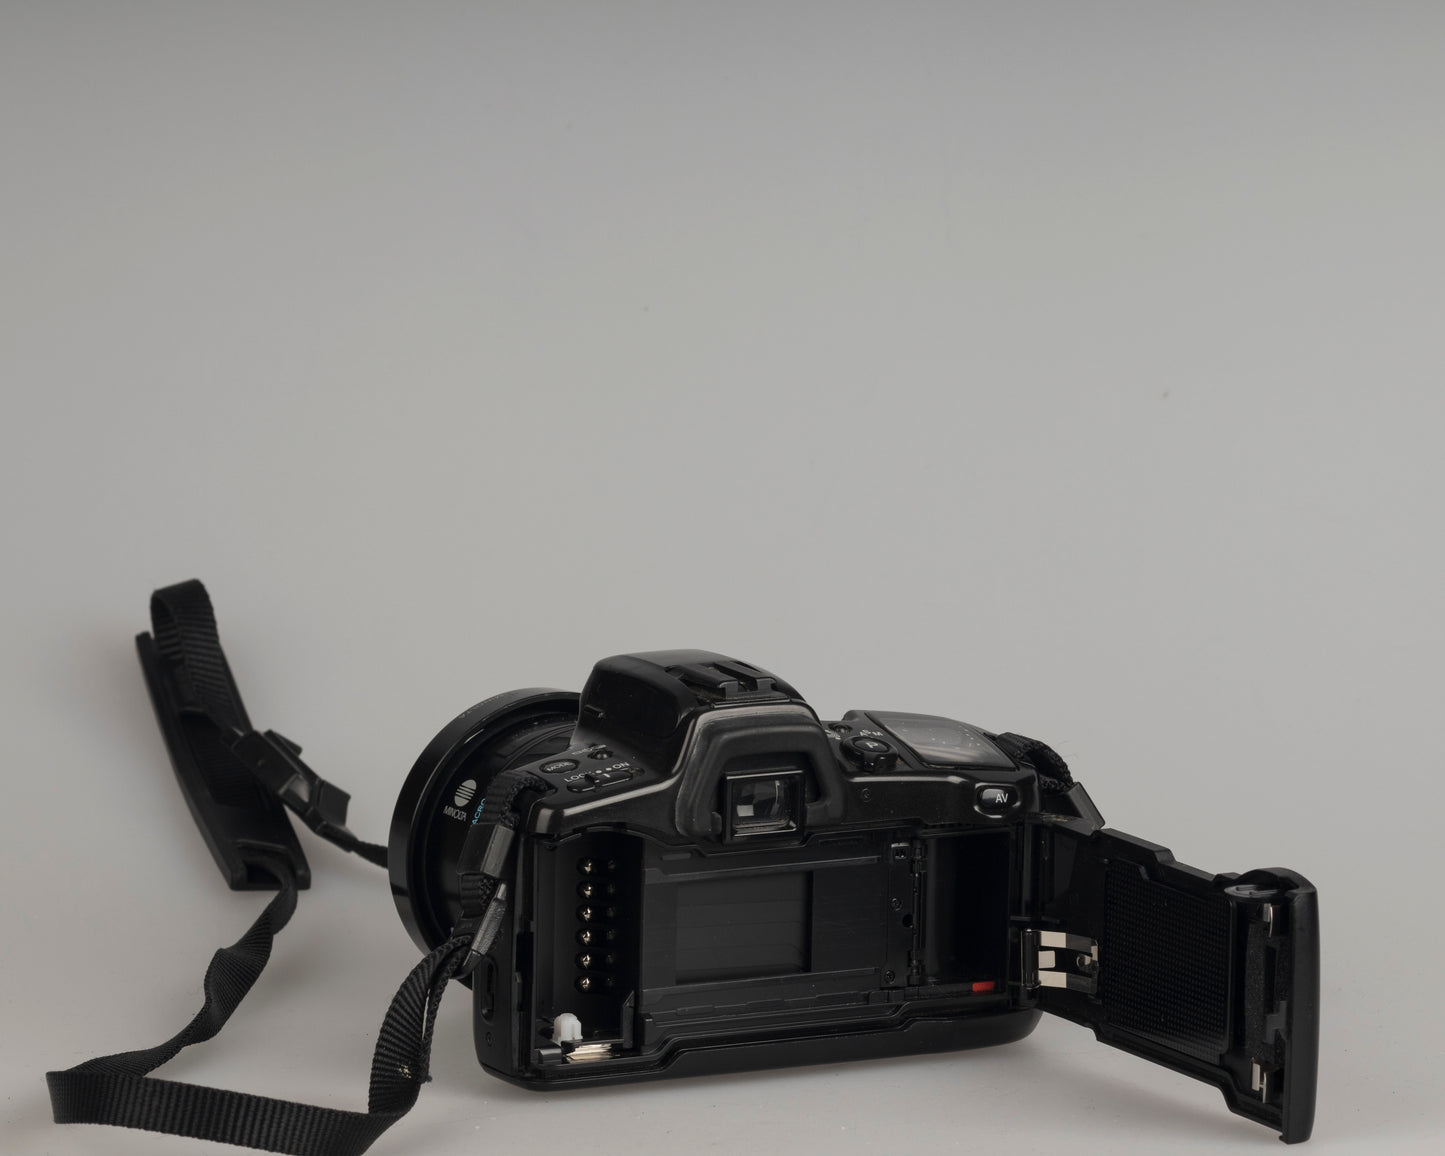 Minolta Maxxum 400si 35mm film SLR camera featuring a 28-80mm lens; shown with film door open